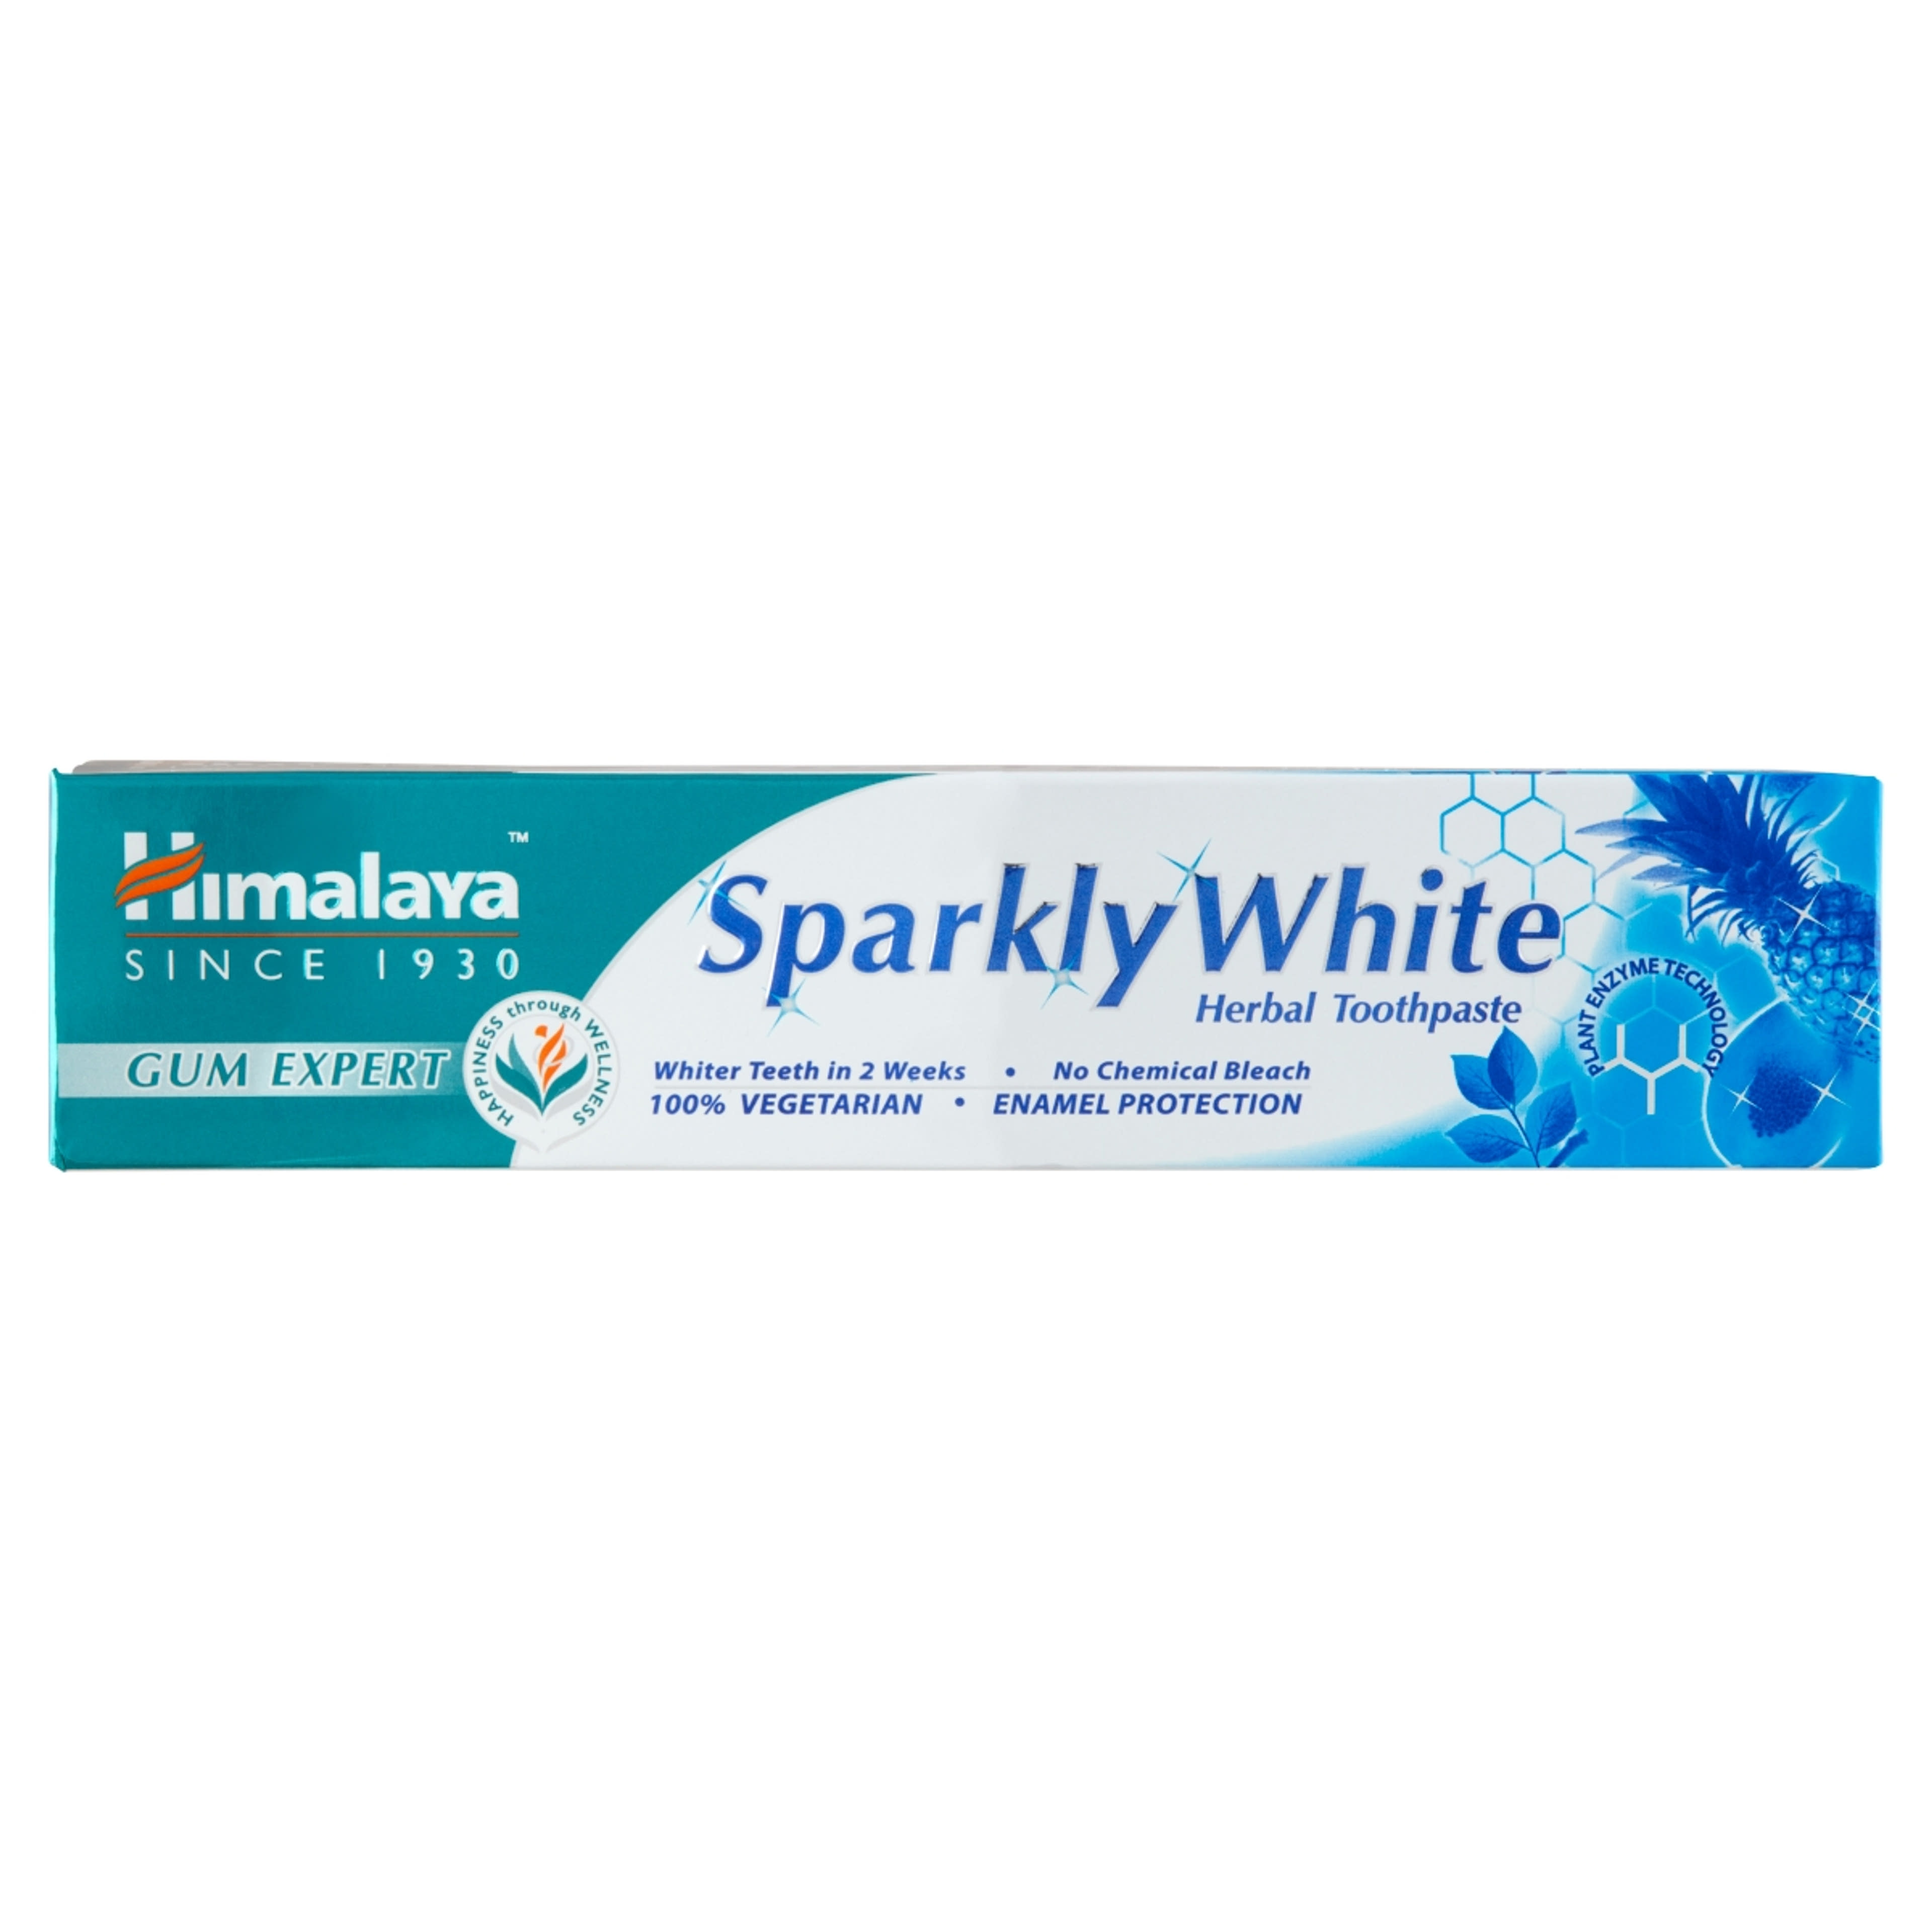 Himalaya Gum Expert Sparkly White fogkrém - 75 ml-1